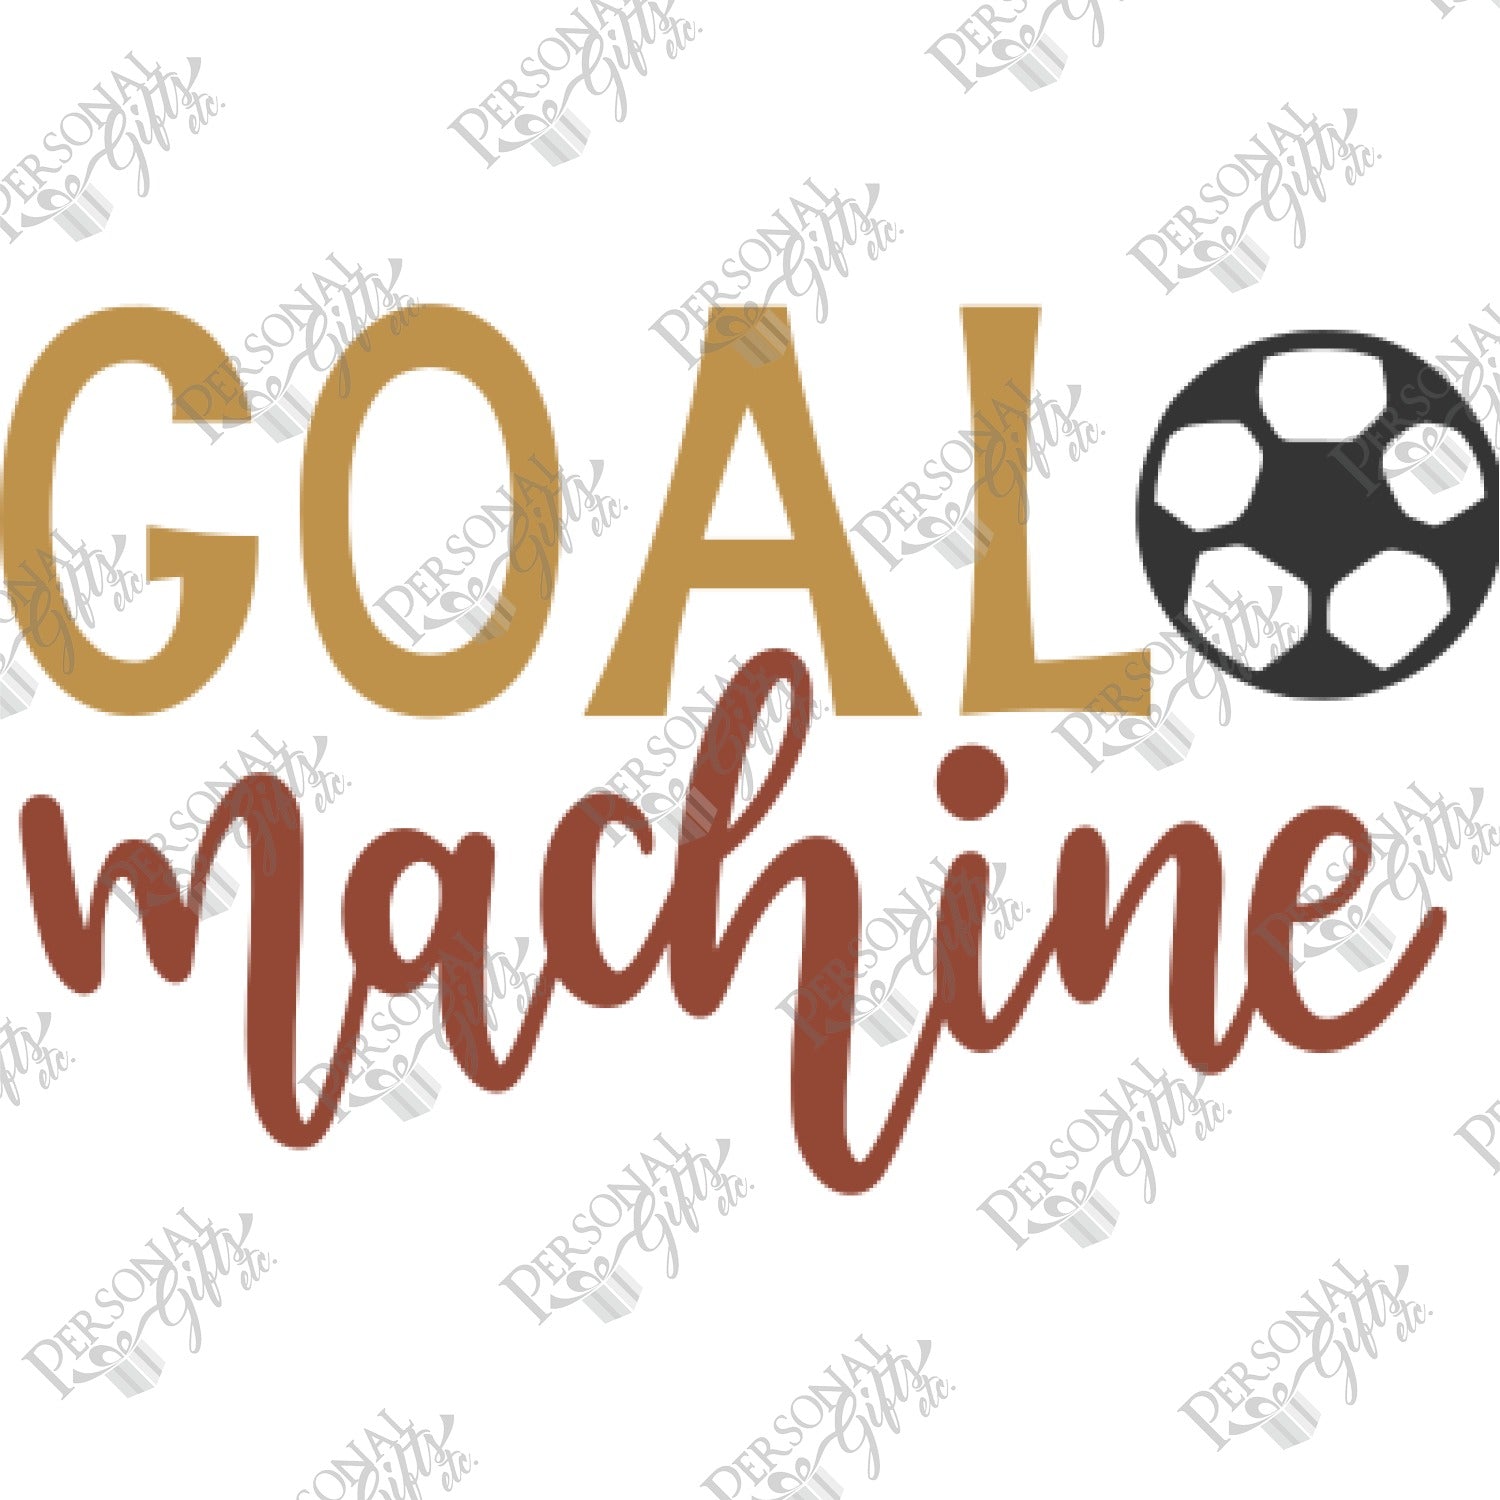 Sub Goal Machine Personal Gifts Etc